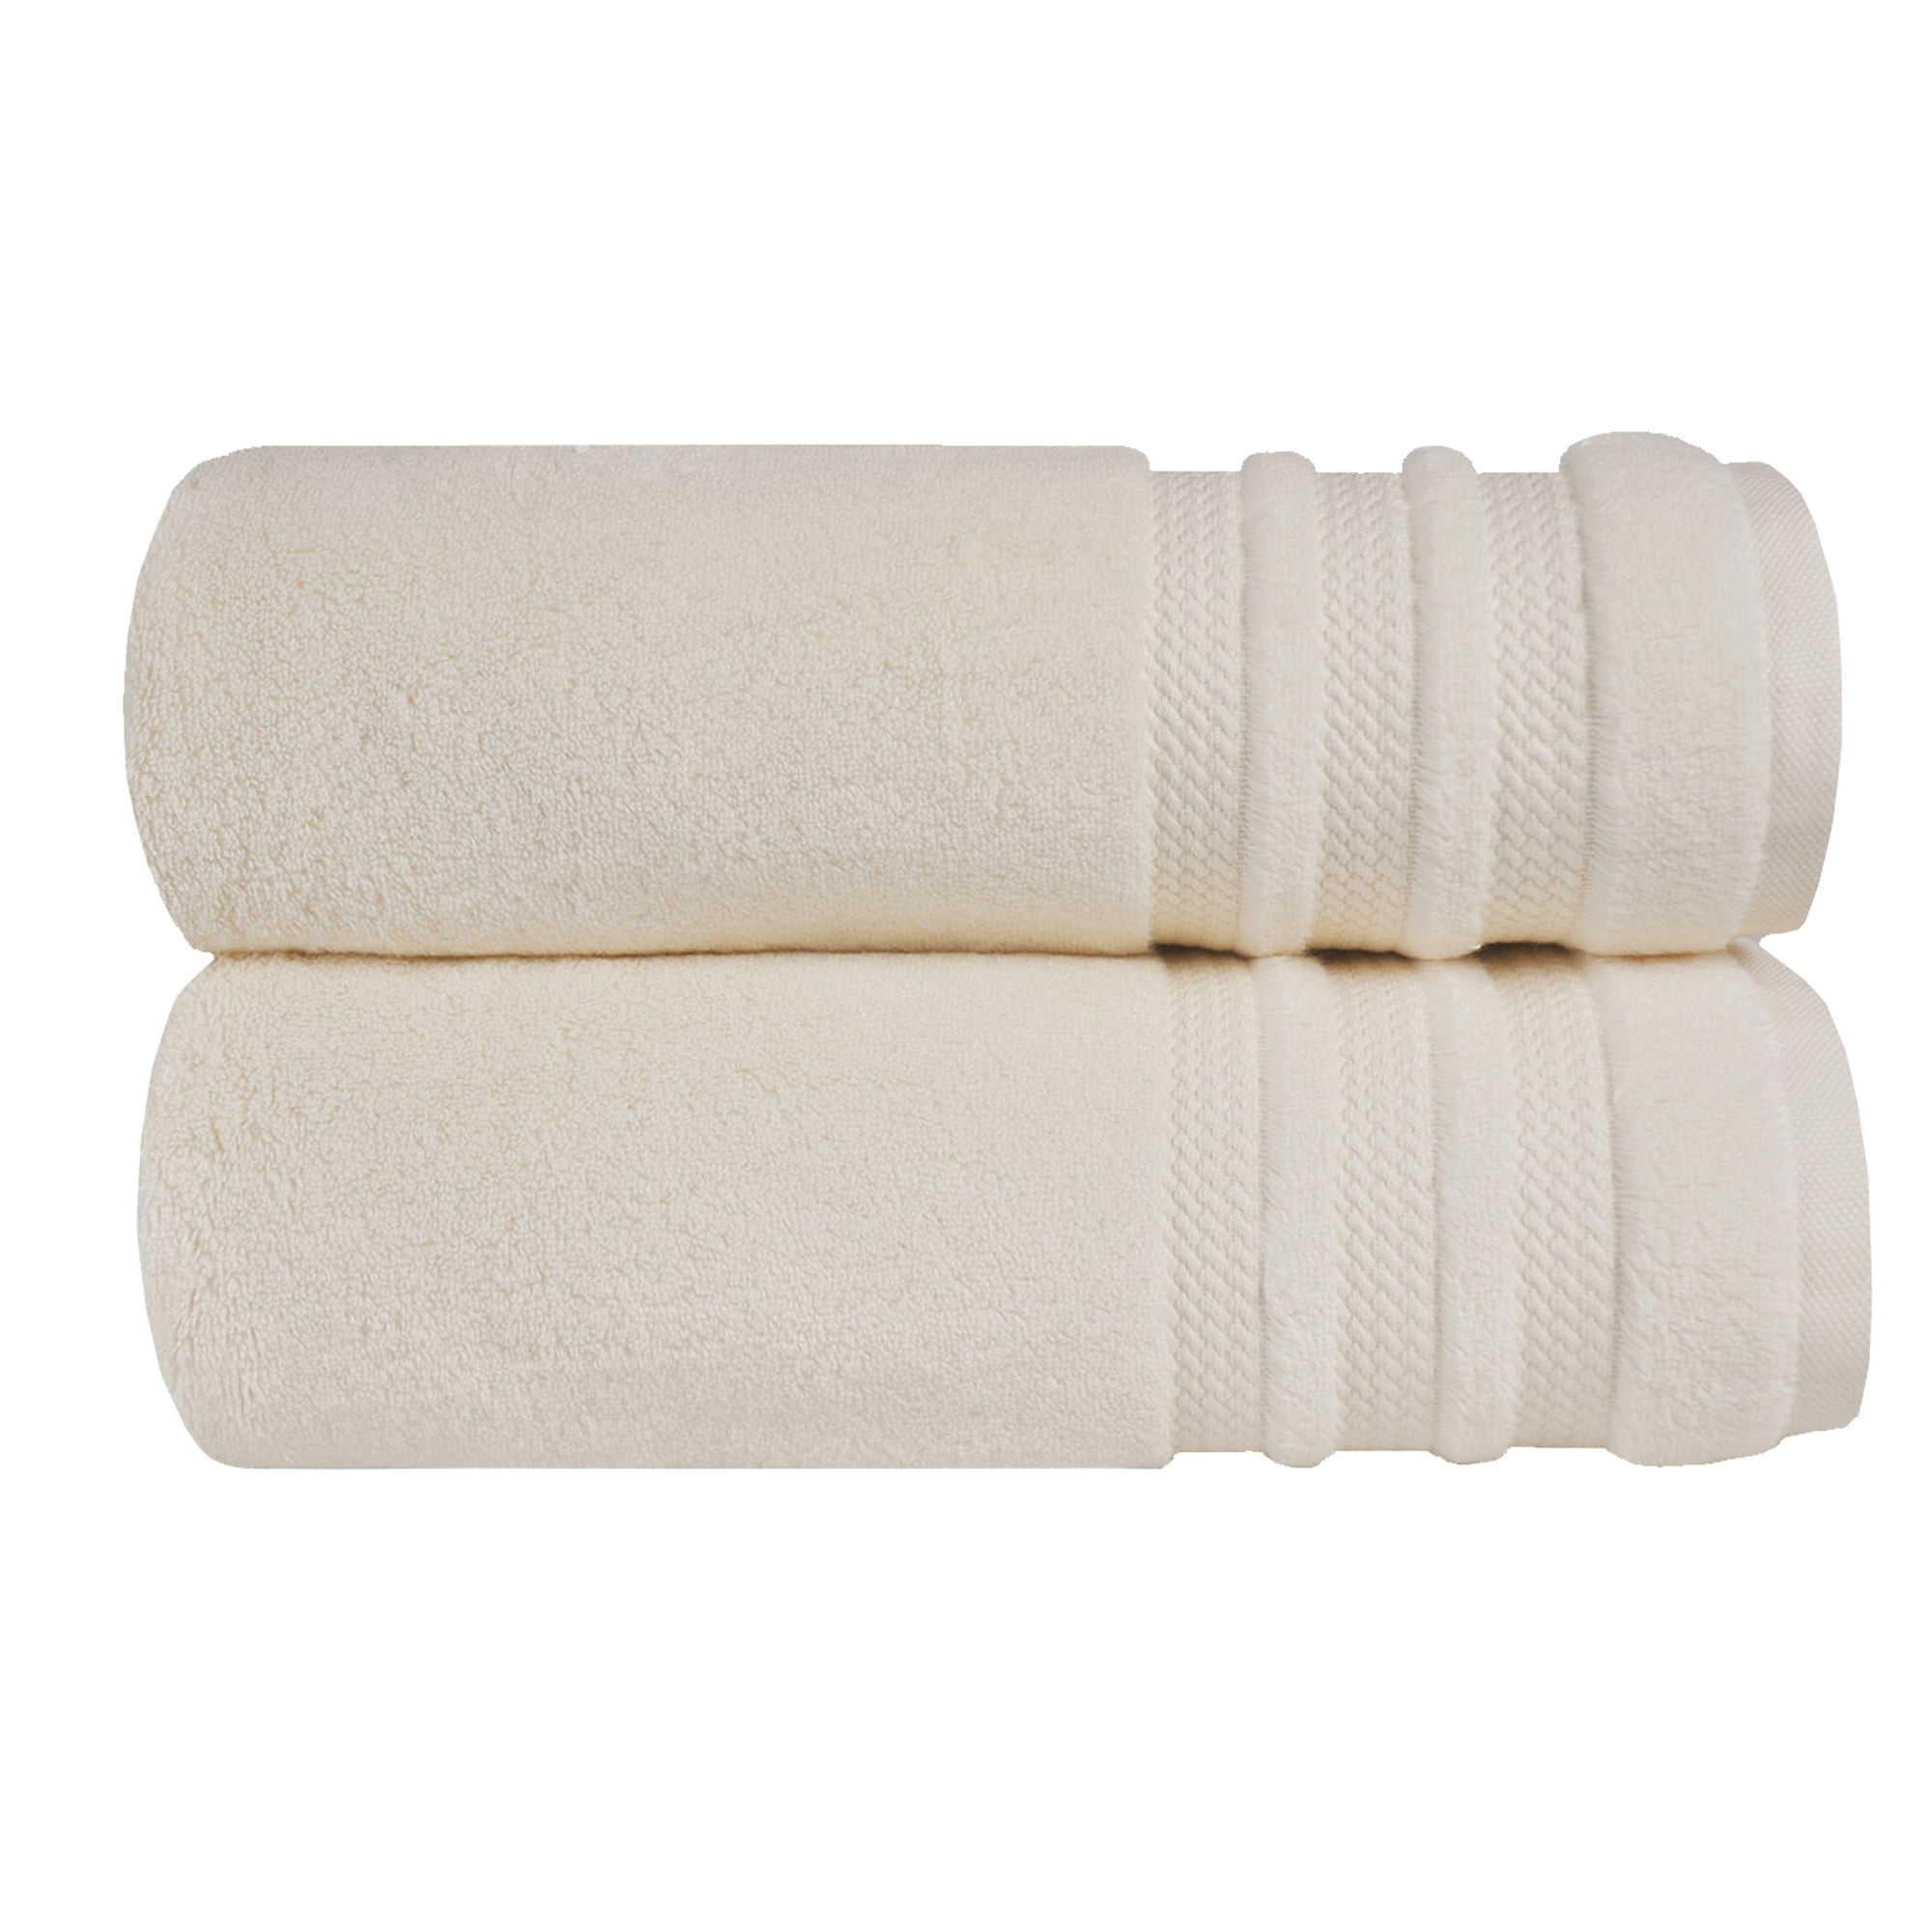 2pcs Lace Bath Towel & Hand Towel Set Extra Large Adult Superfine